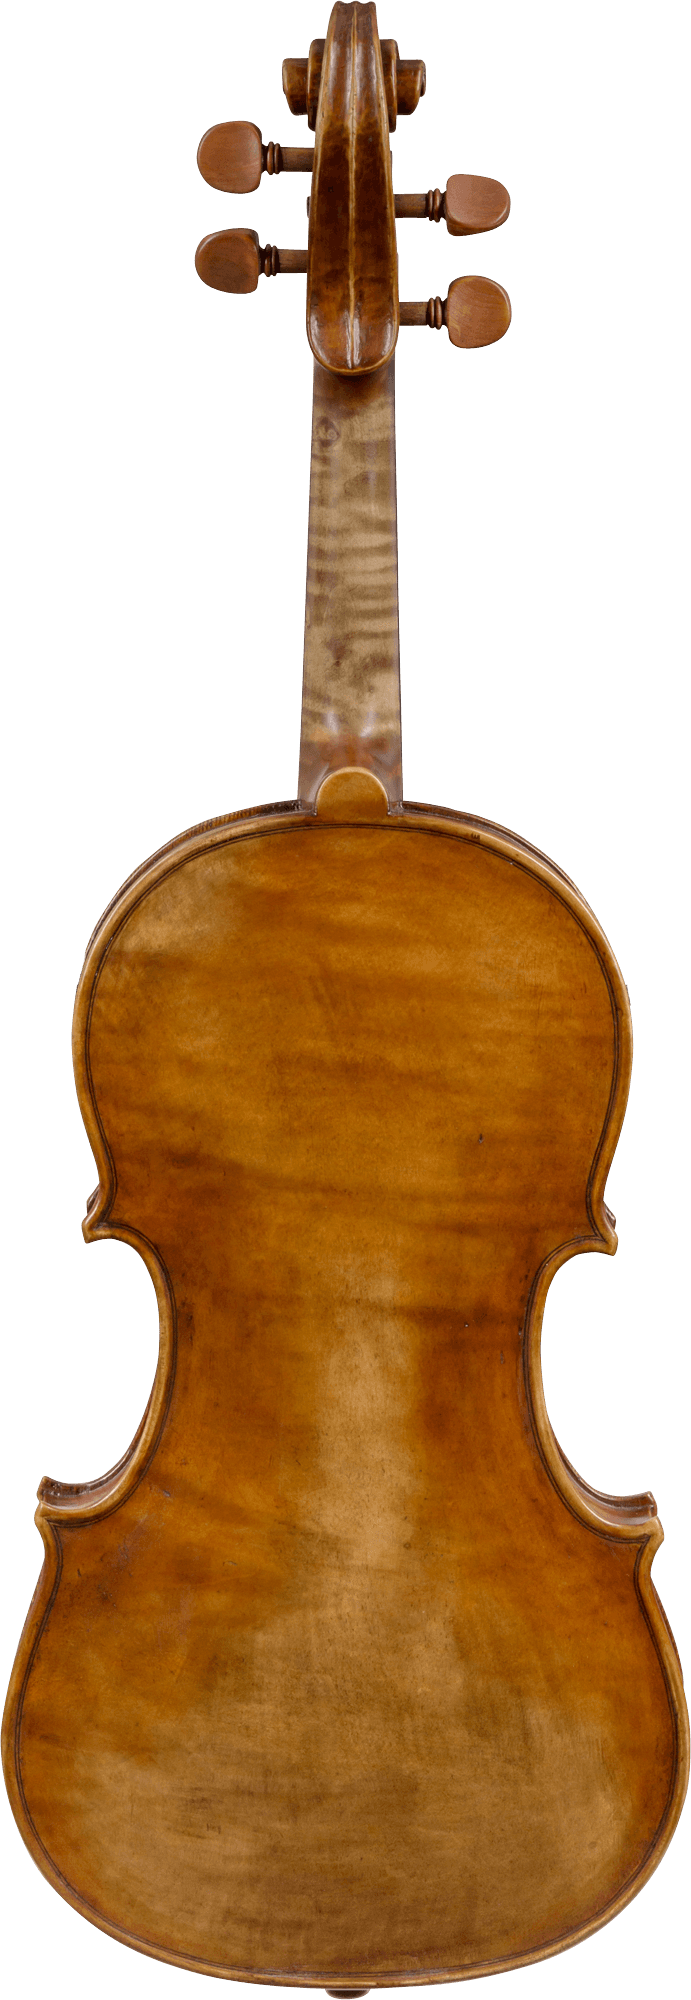 Paolo Vettori 'Balestrieri' Violin, Florence, 2018